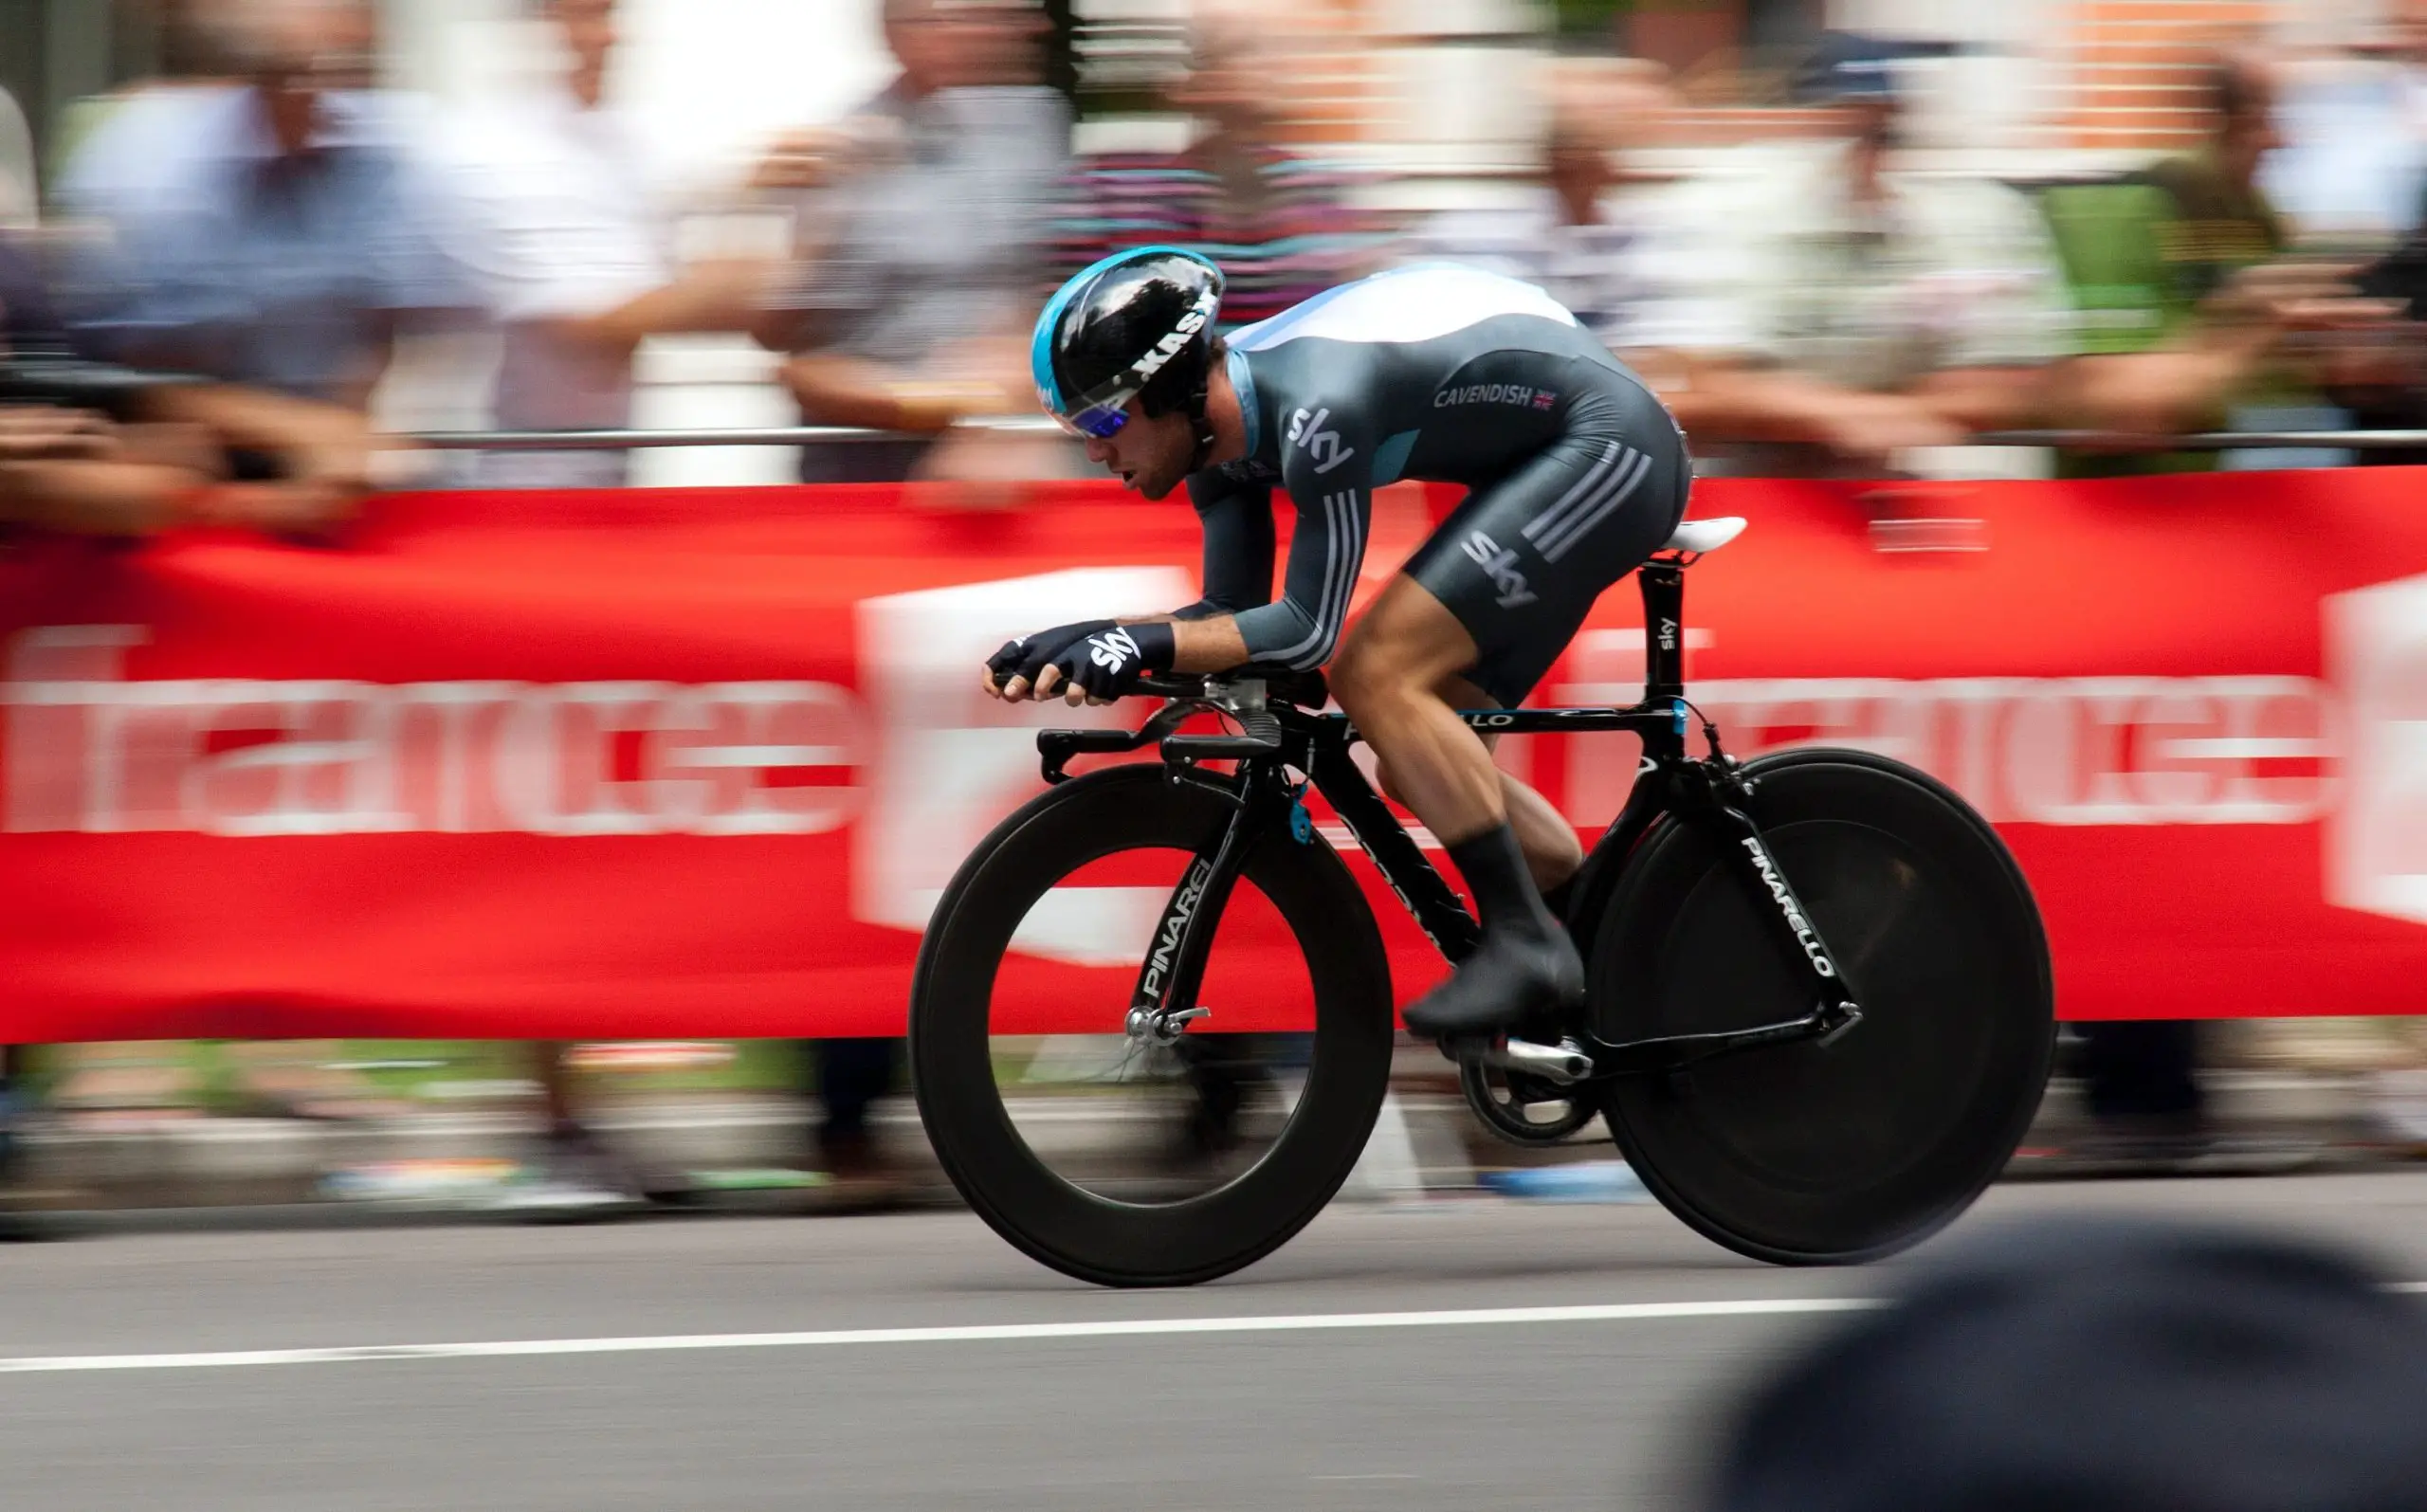 Man cycling fast on a high performance bike. Source: chris peeters, pexels